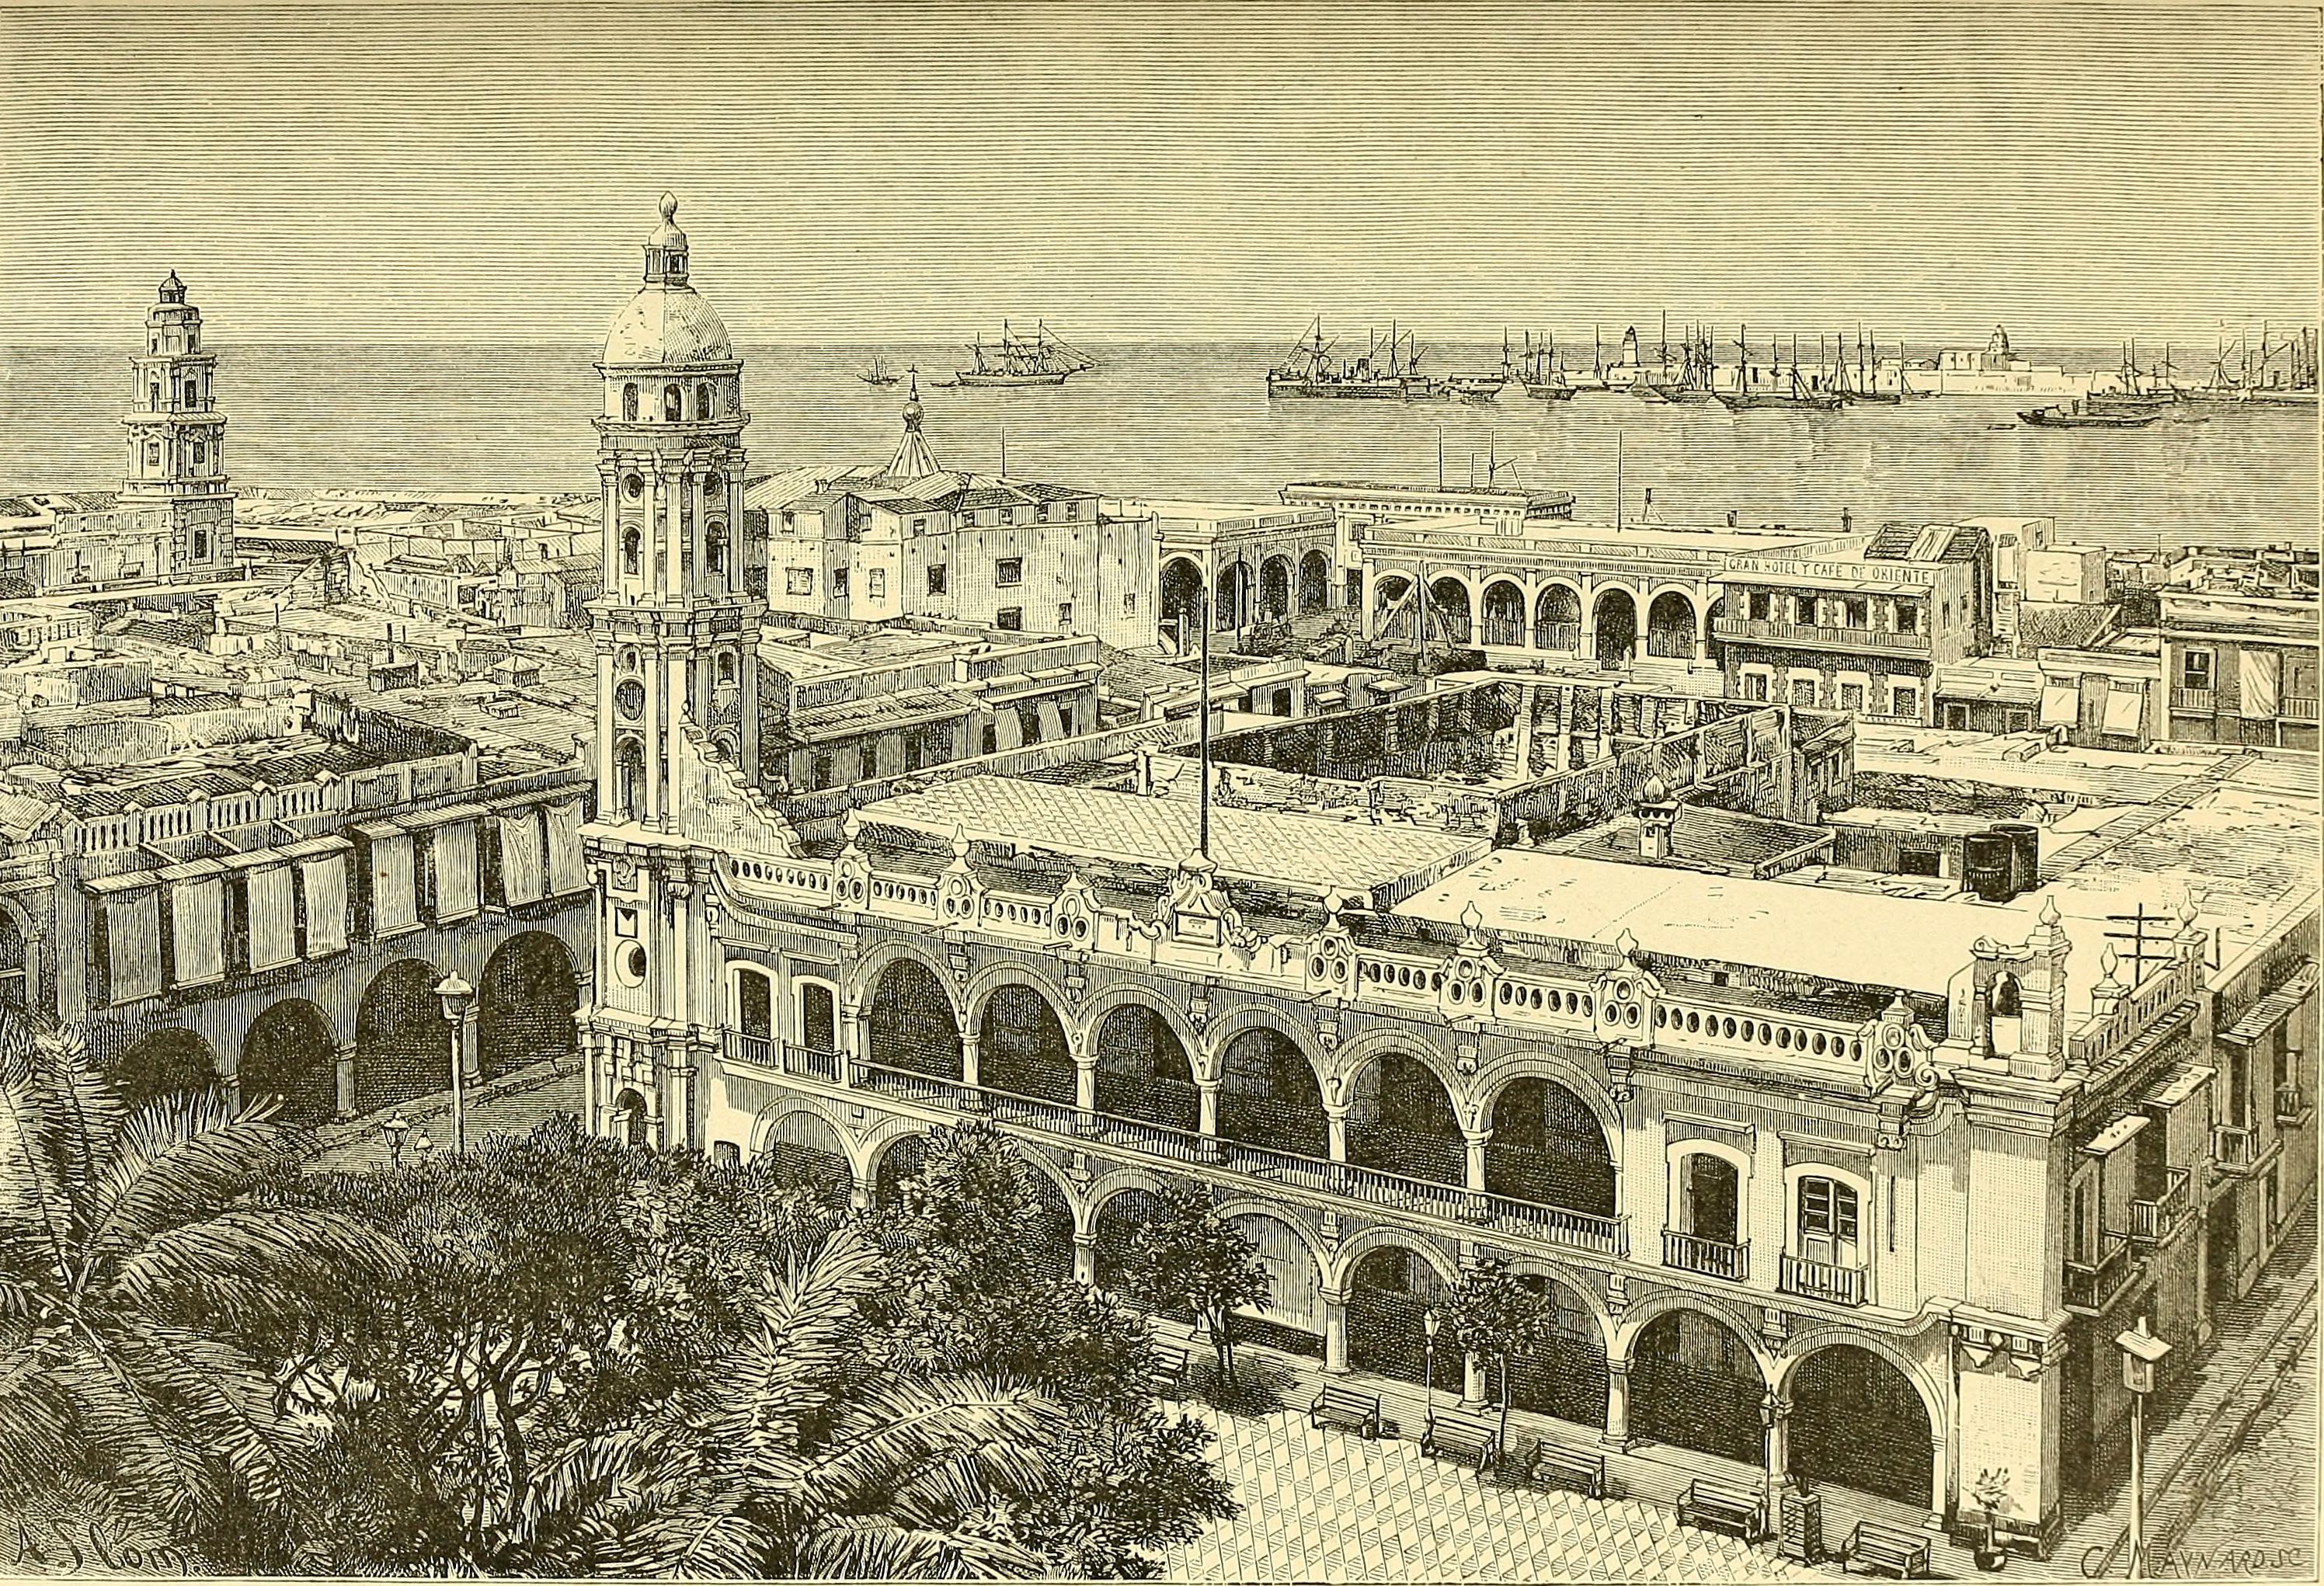 Veracruz city center in 1876.